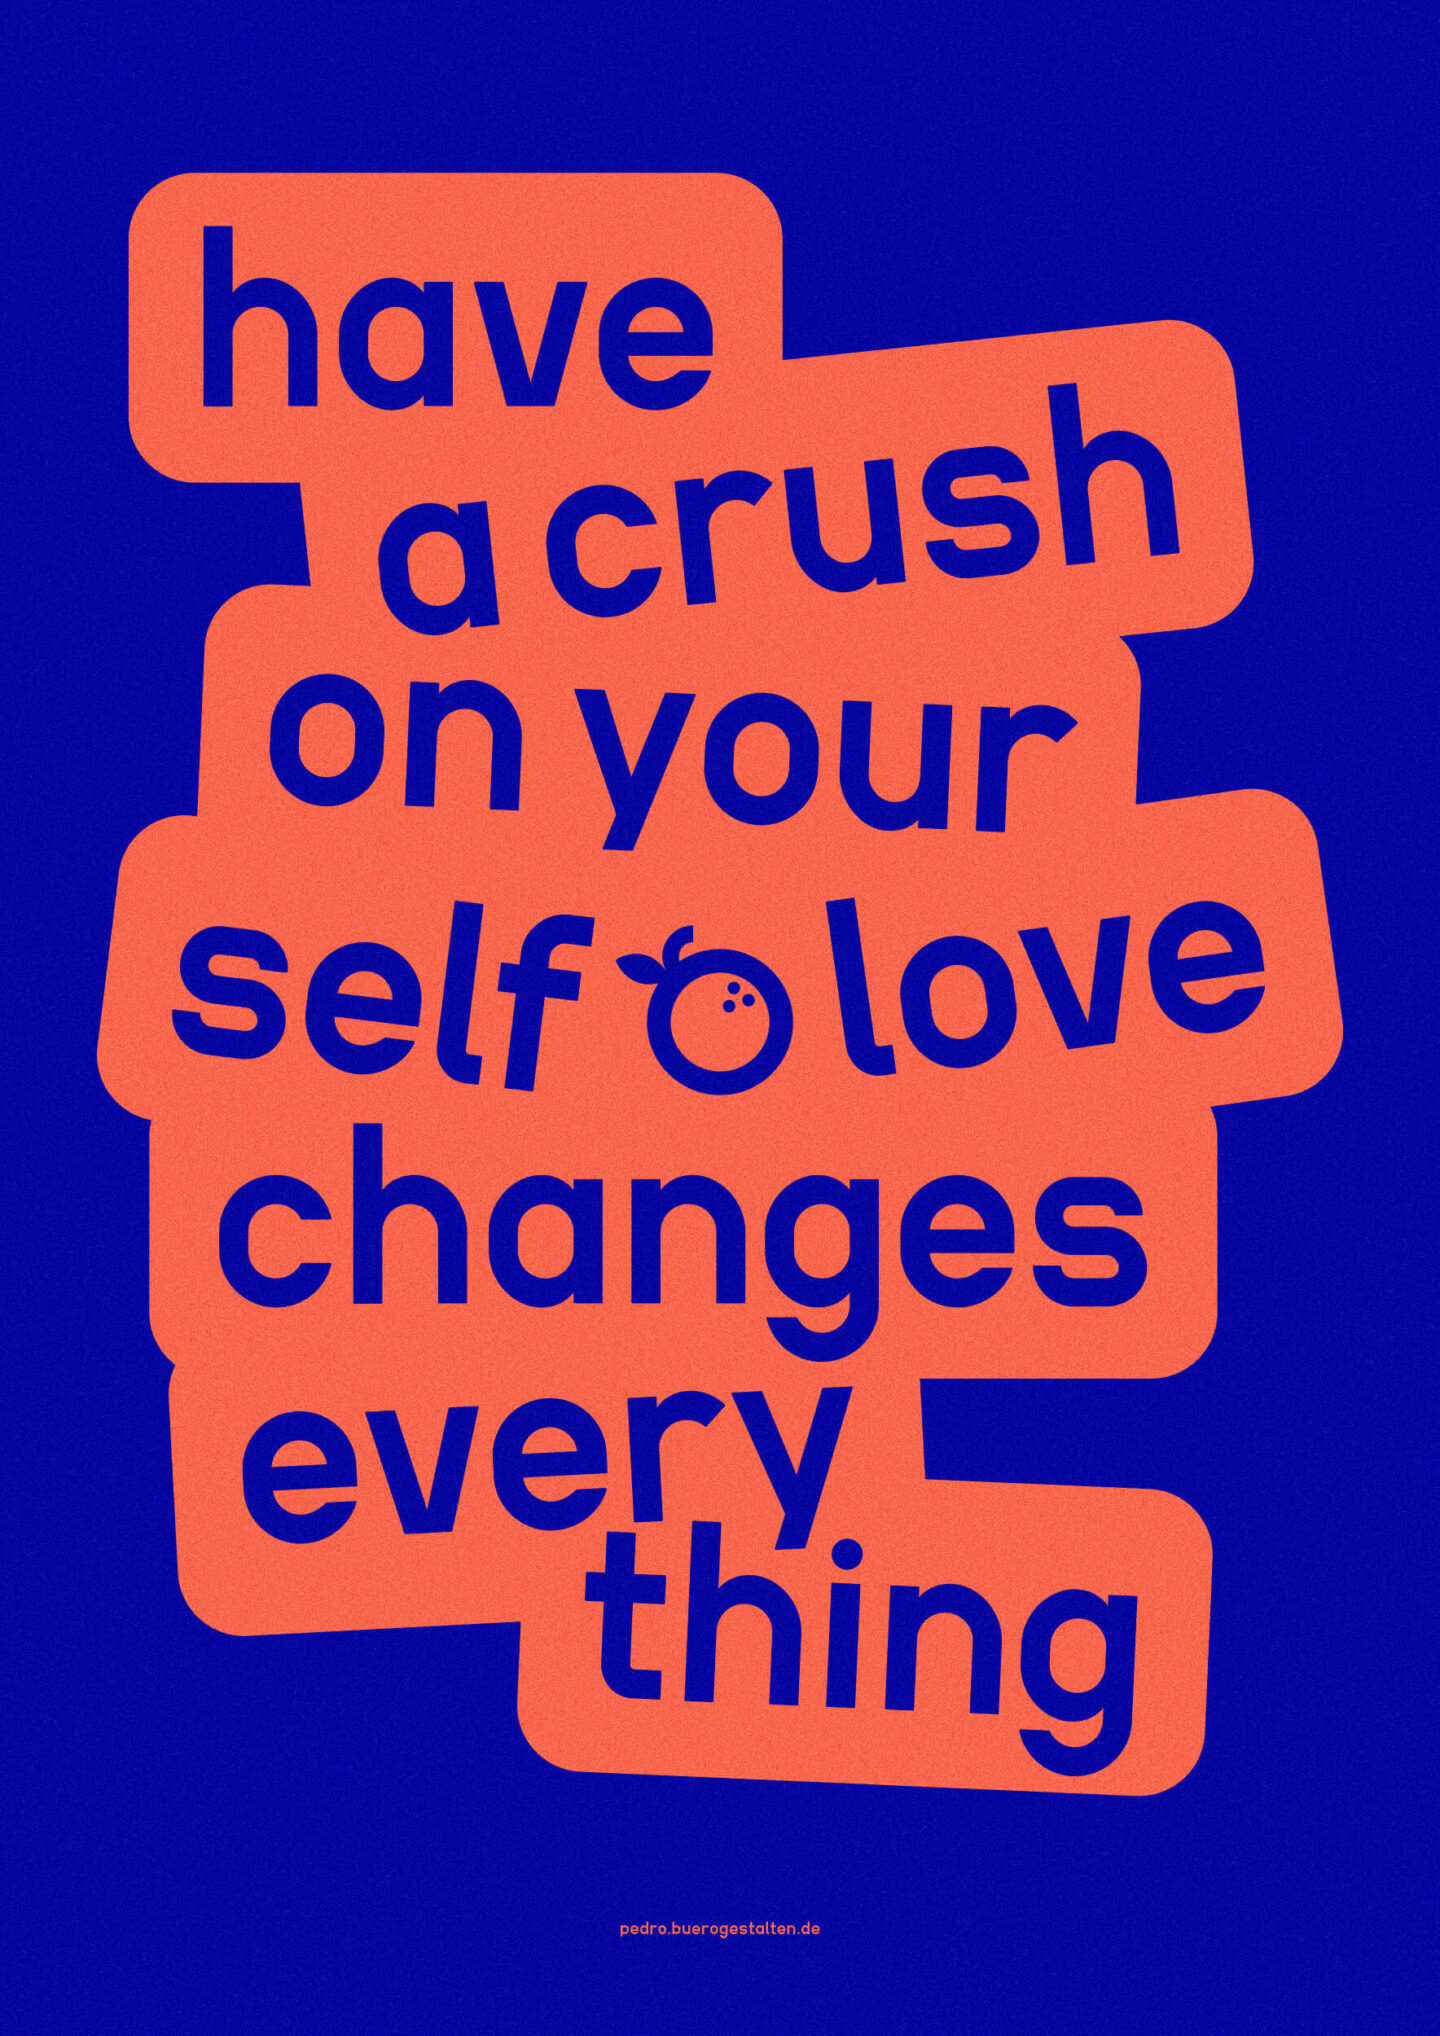 Karsten Rohrbeck: Selflove changes everything Poster (Pedro Specimen)